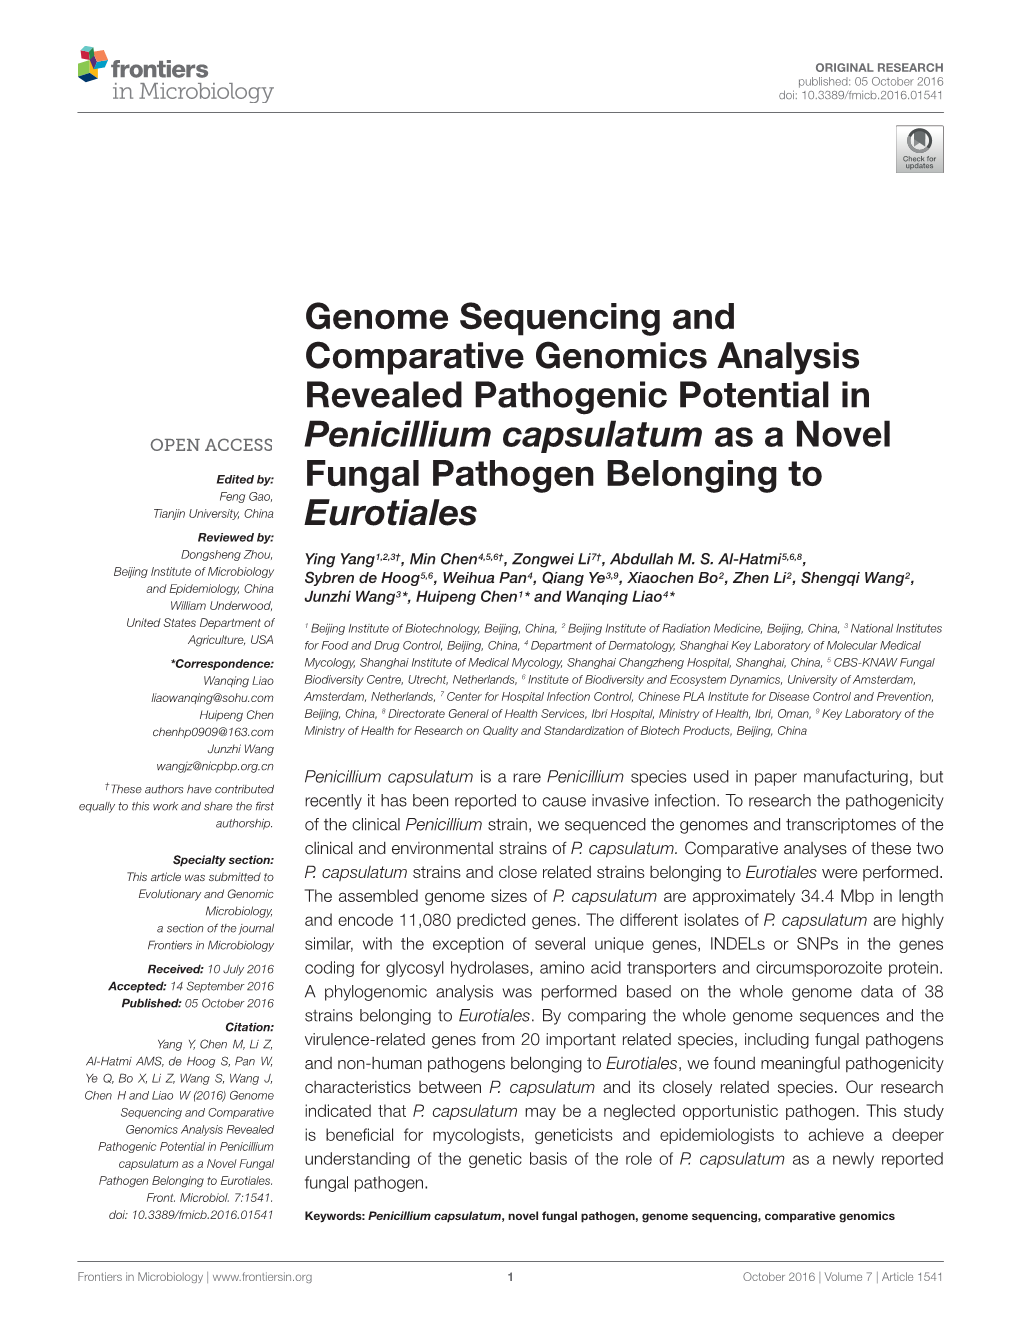 Genome Sequencing and Comparative Genomics Analysis Revealed Pathogenic Potential in Penicillium Capsulatum As a Novel